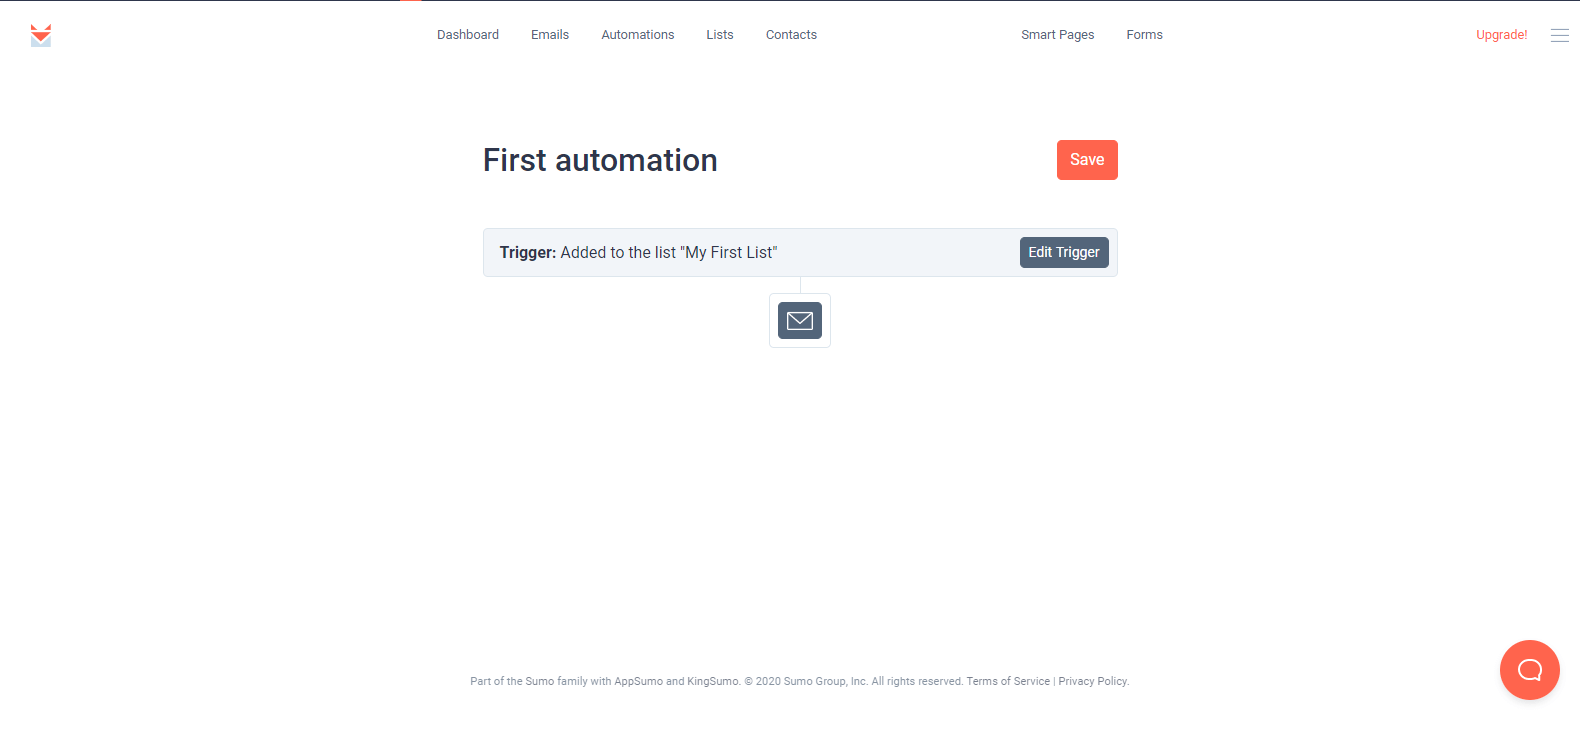 SendFox first automation